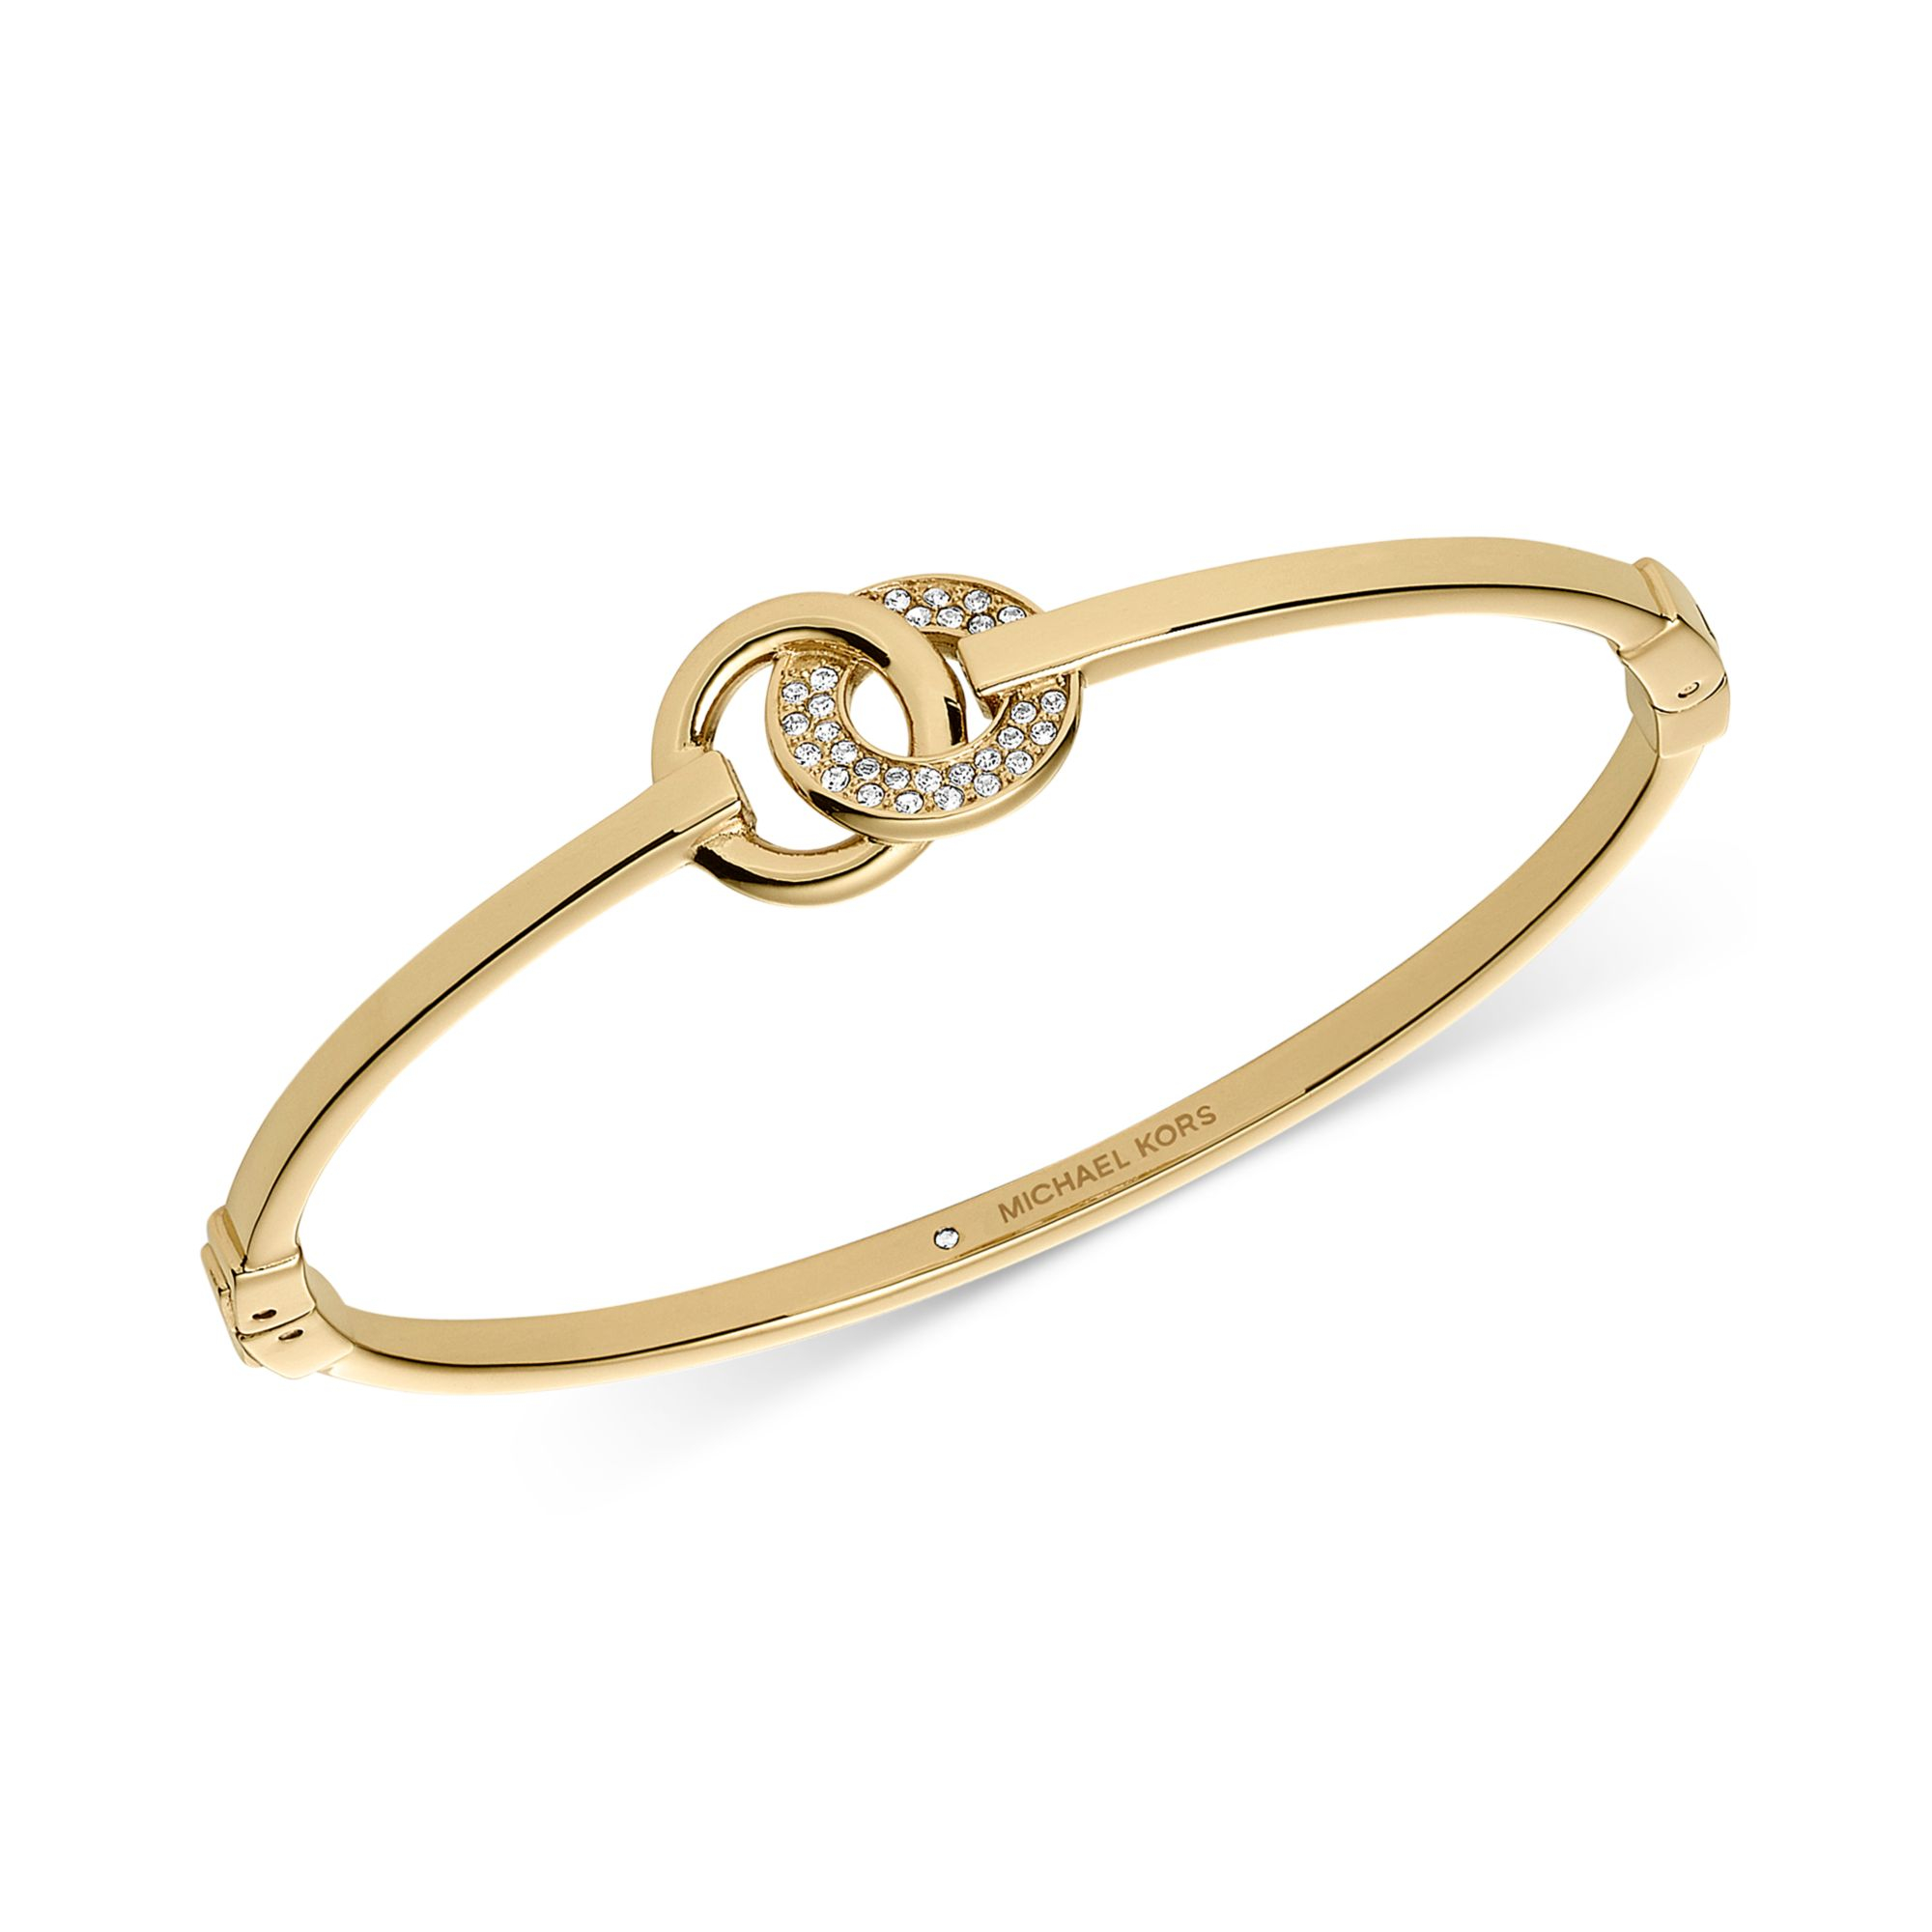 Michael Kors Goldtone Crystal Pavè Interlock Ring Bangle Bracelet in ...